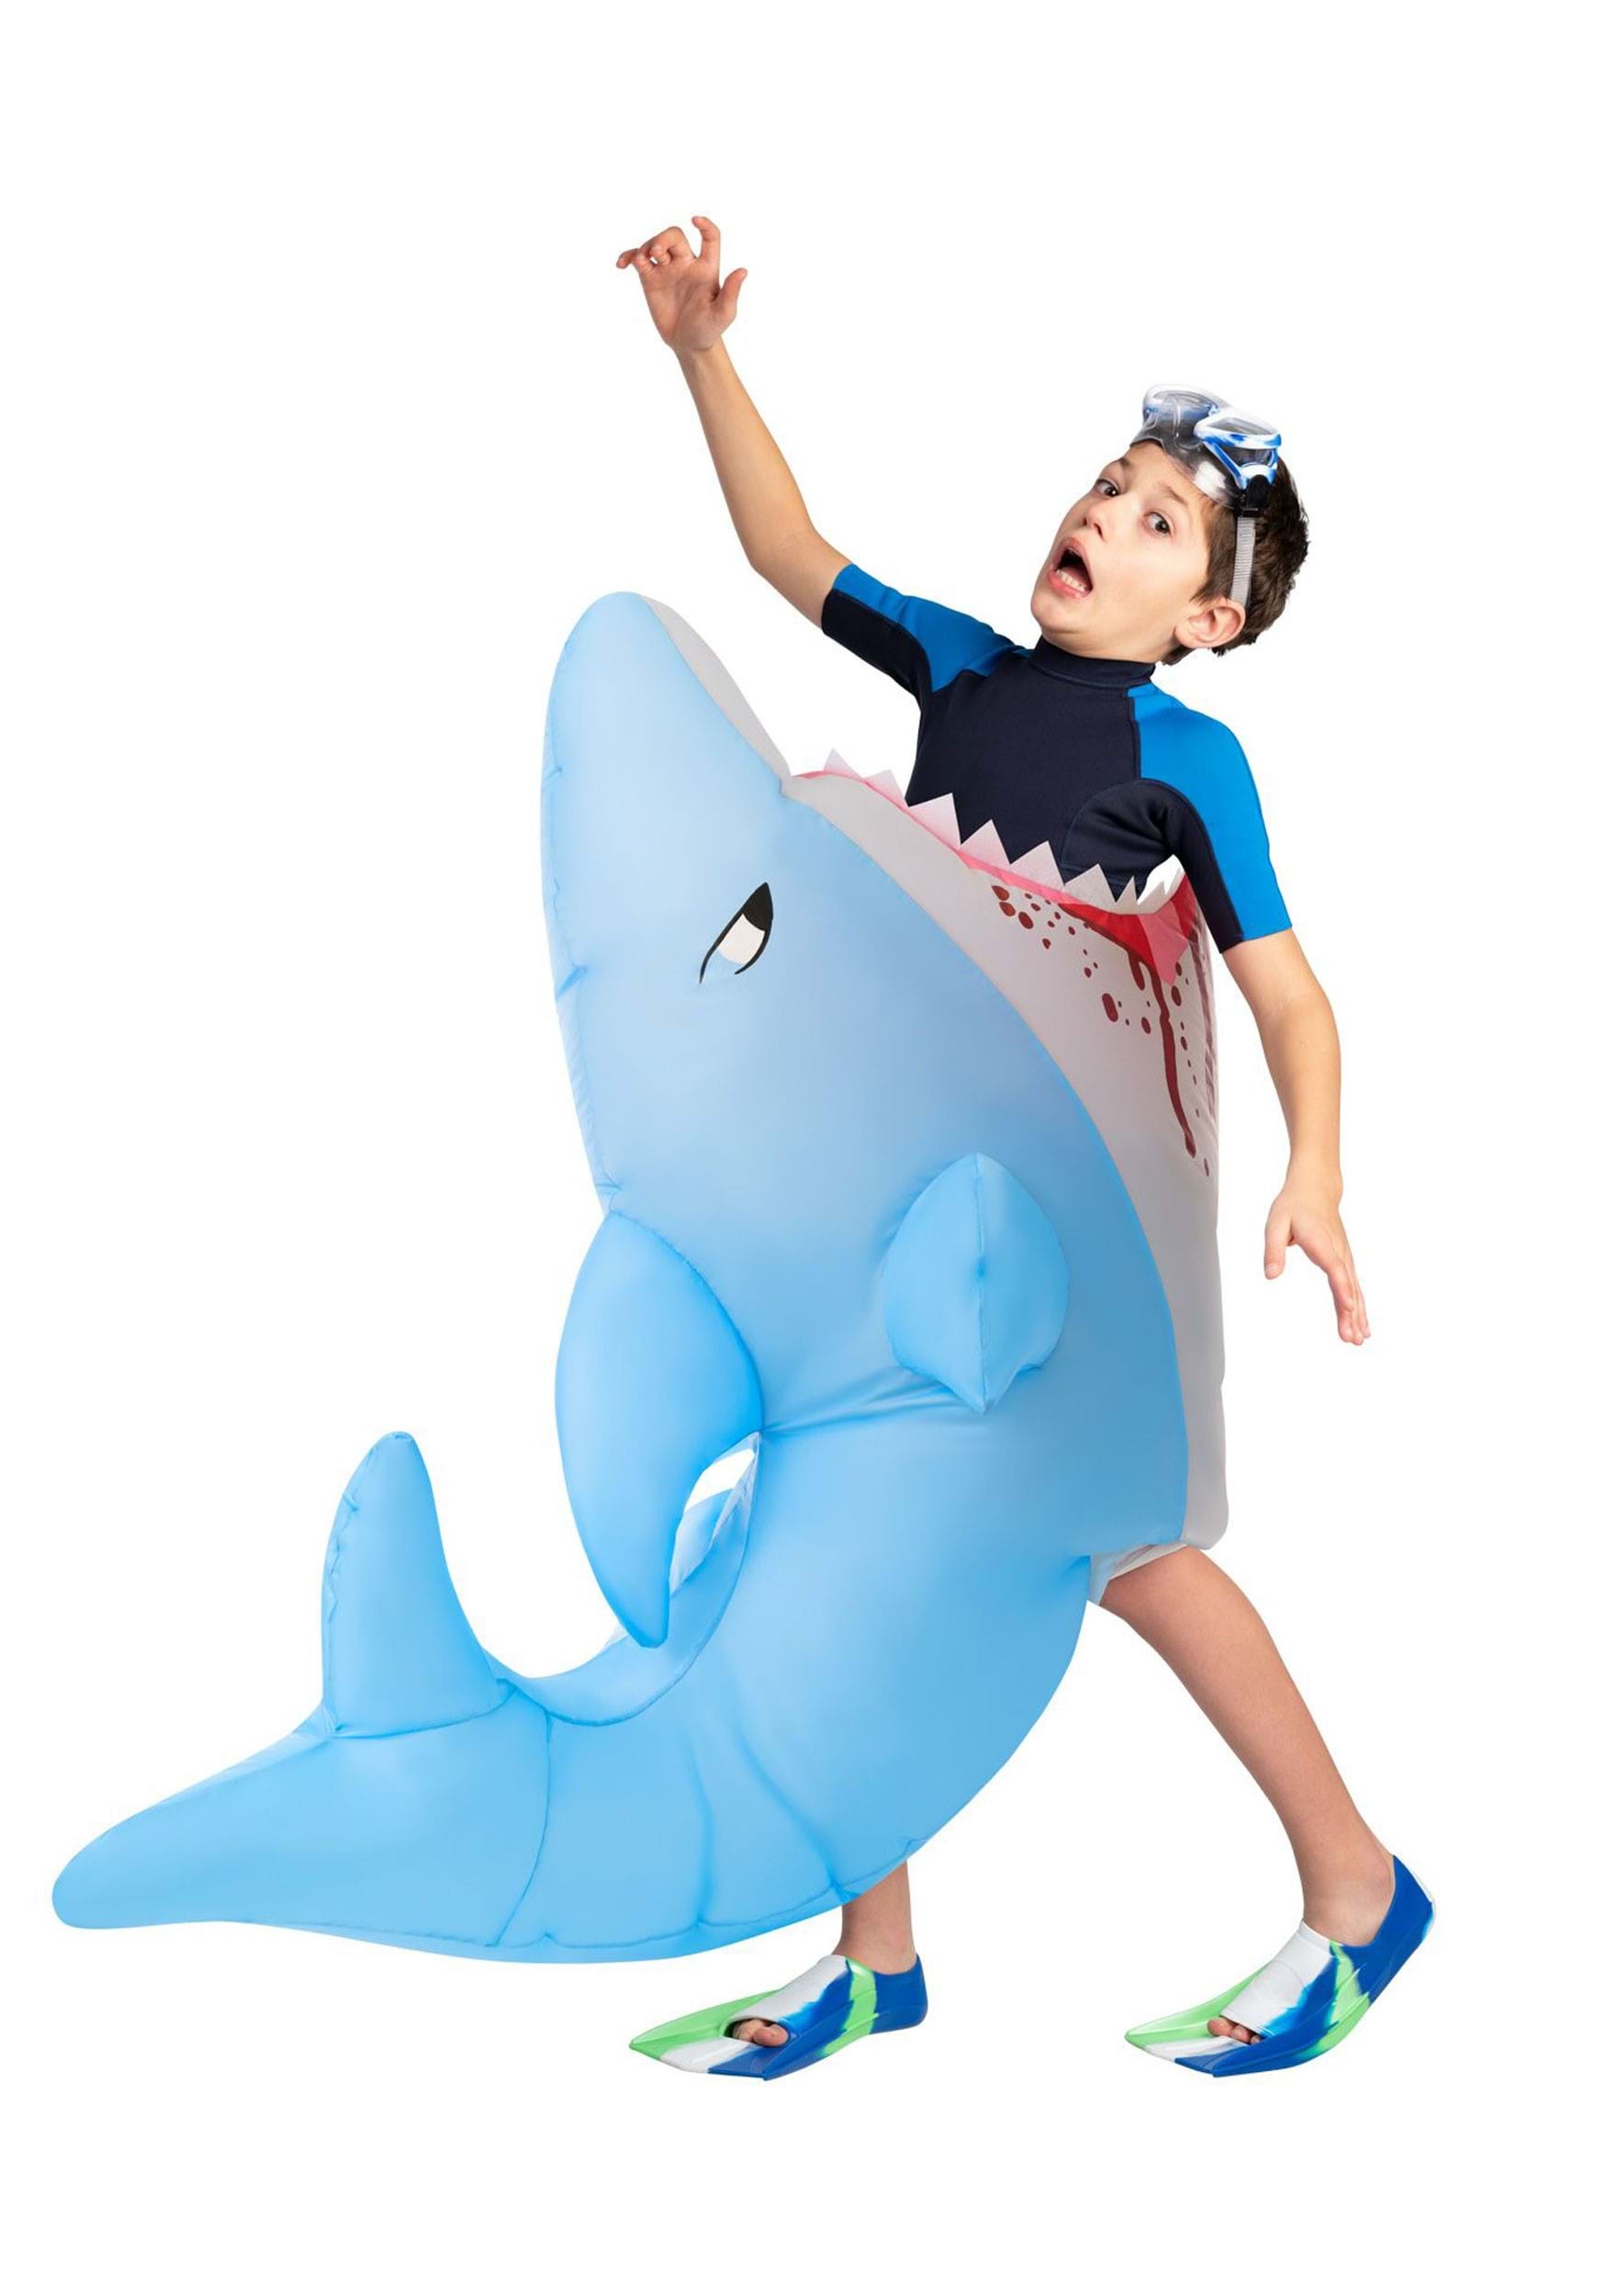 Kid's Man Eating Inflatable Shark